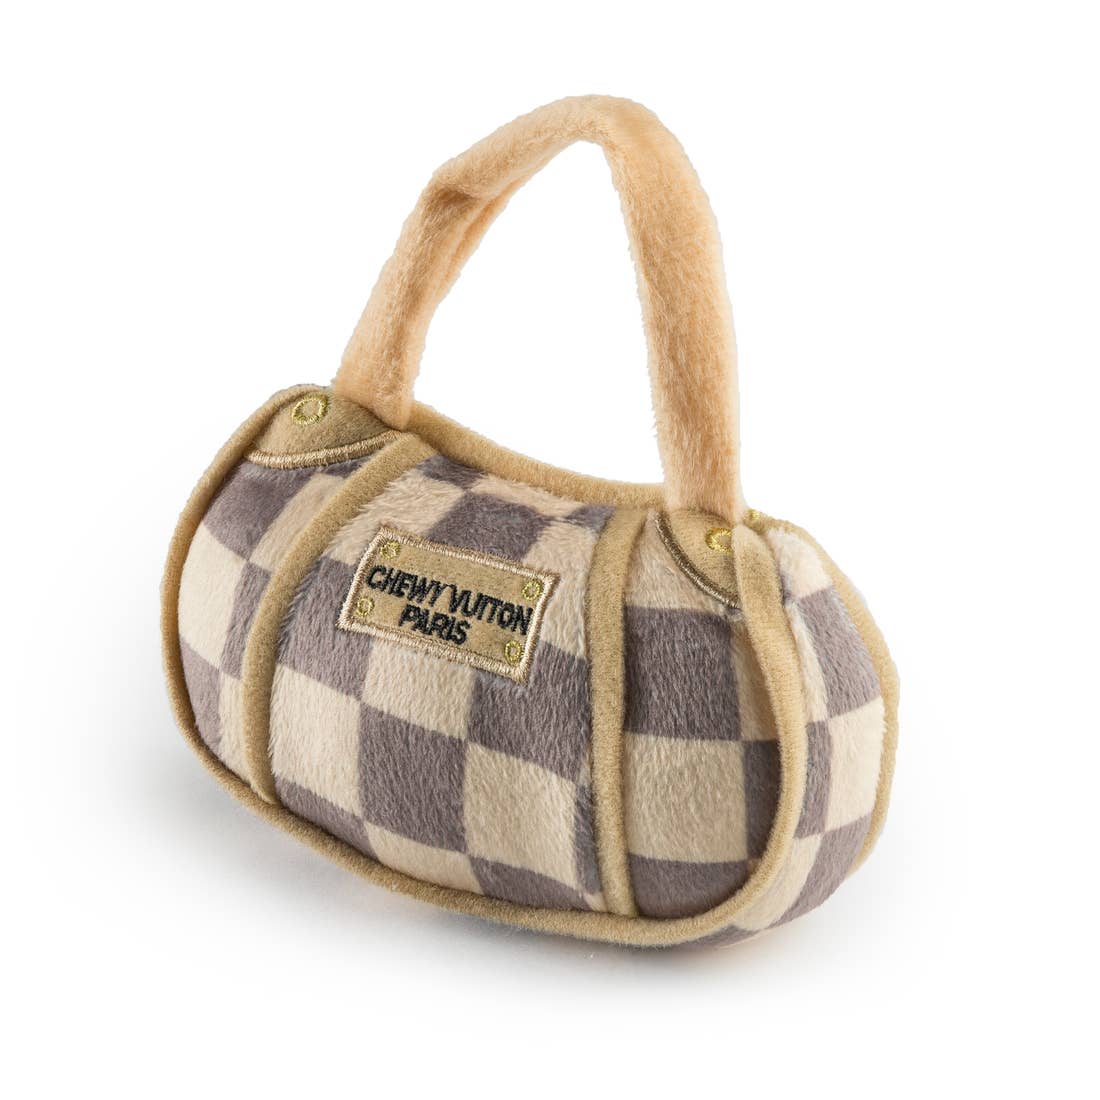 Chewy Vuitton Checker Handbag Chew Toy – The Polka-Dot Palm